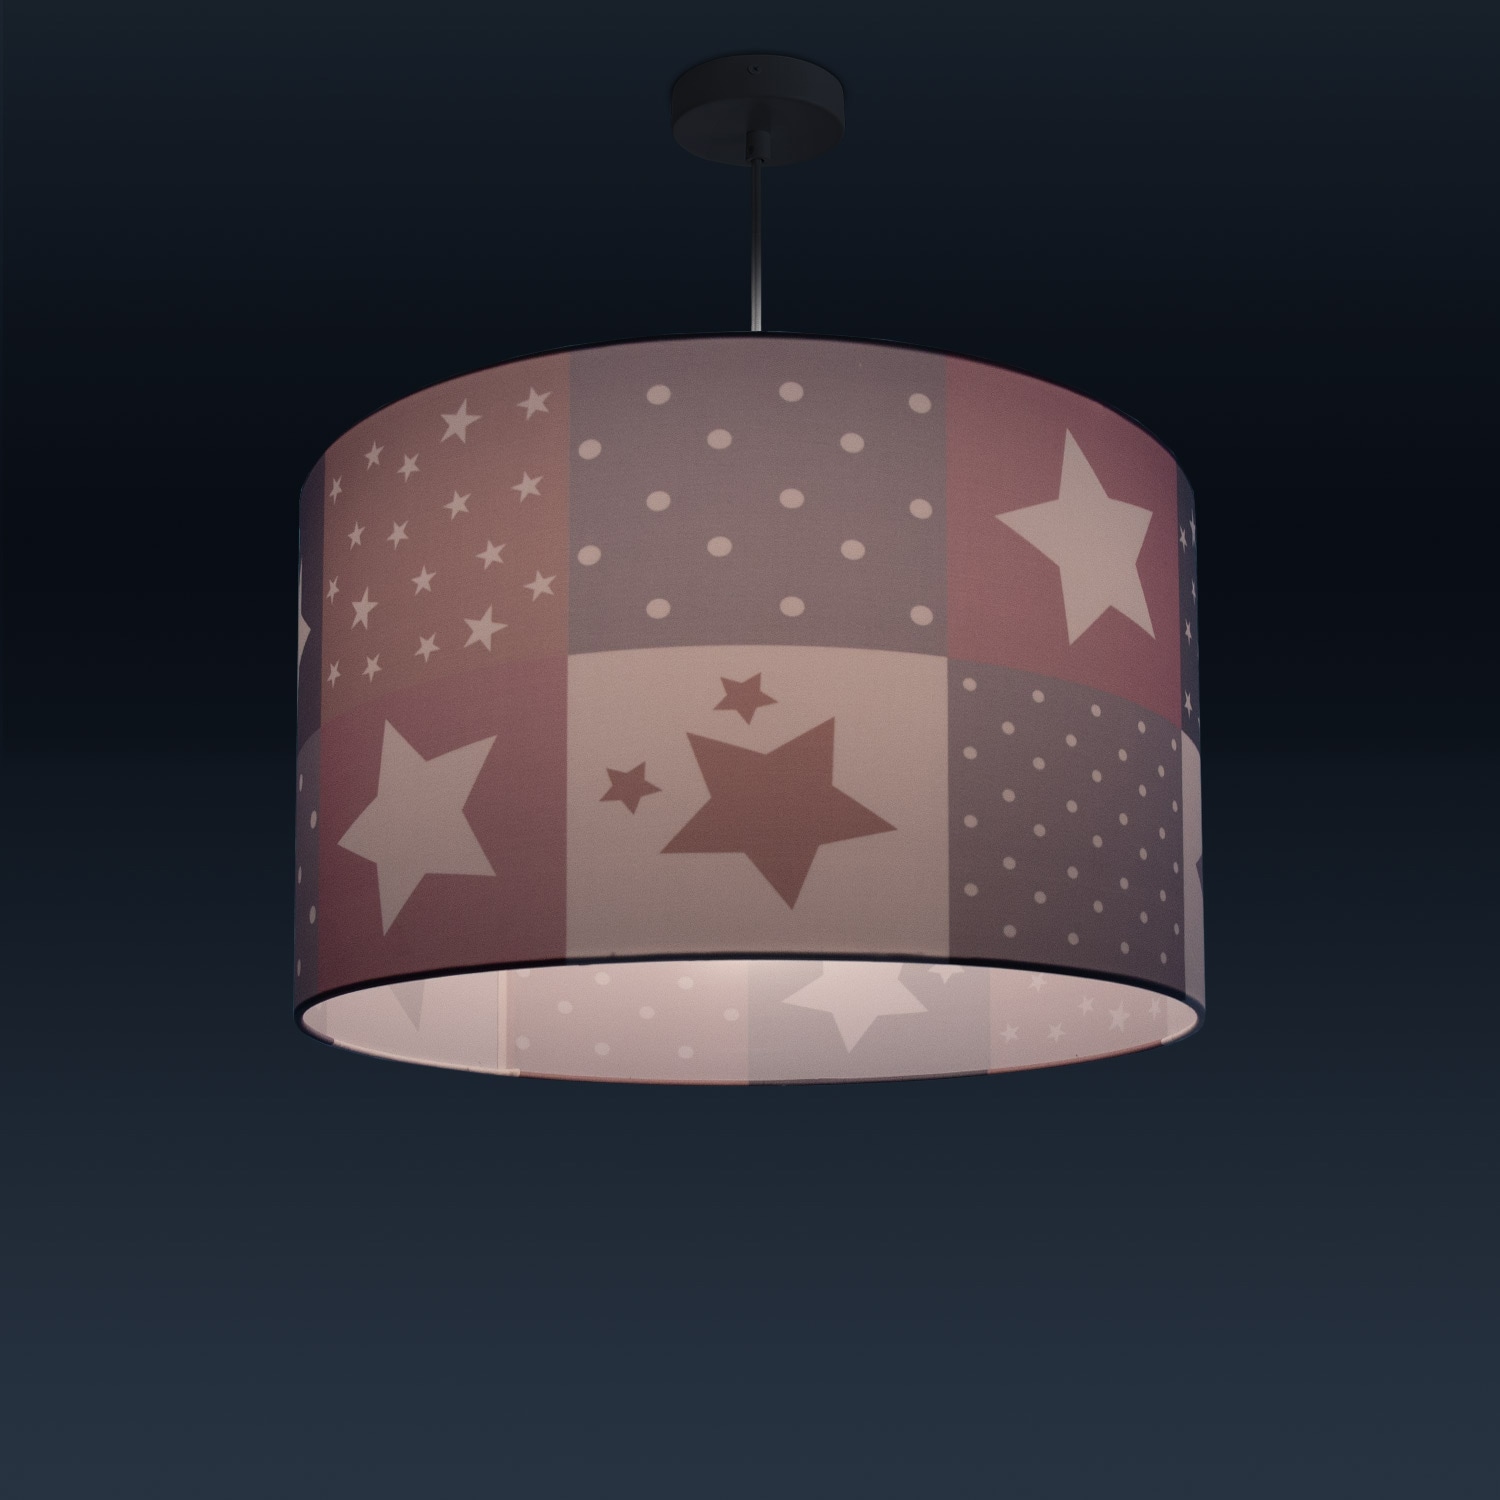 Paco Home bei Sternen 345«, 1 Motiv Lampe LED »Cosmo E27 Pendelleuchte Deckenlampe OTTO flammig-flammig, Kinderlampe Kinderzimmer